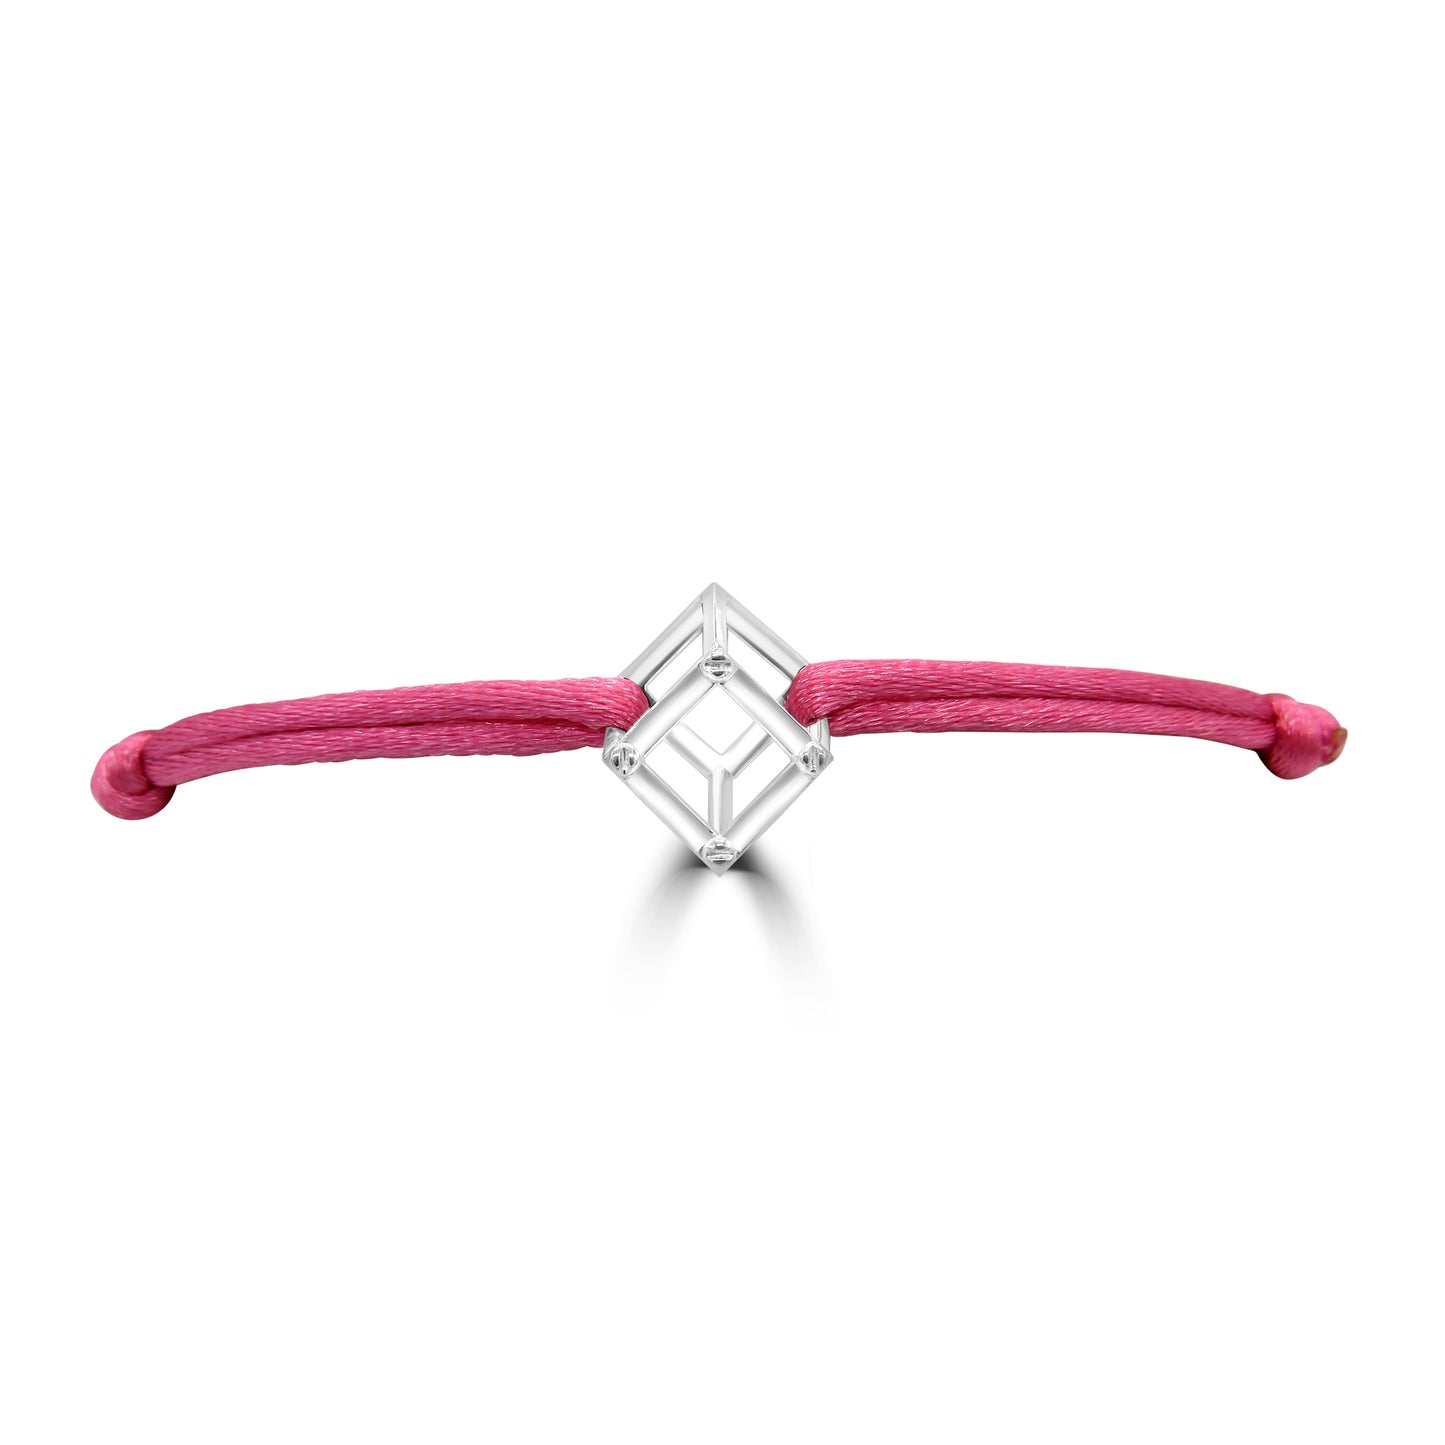 White gold cube mirage bracelet with pink silk ribbon